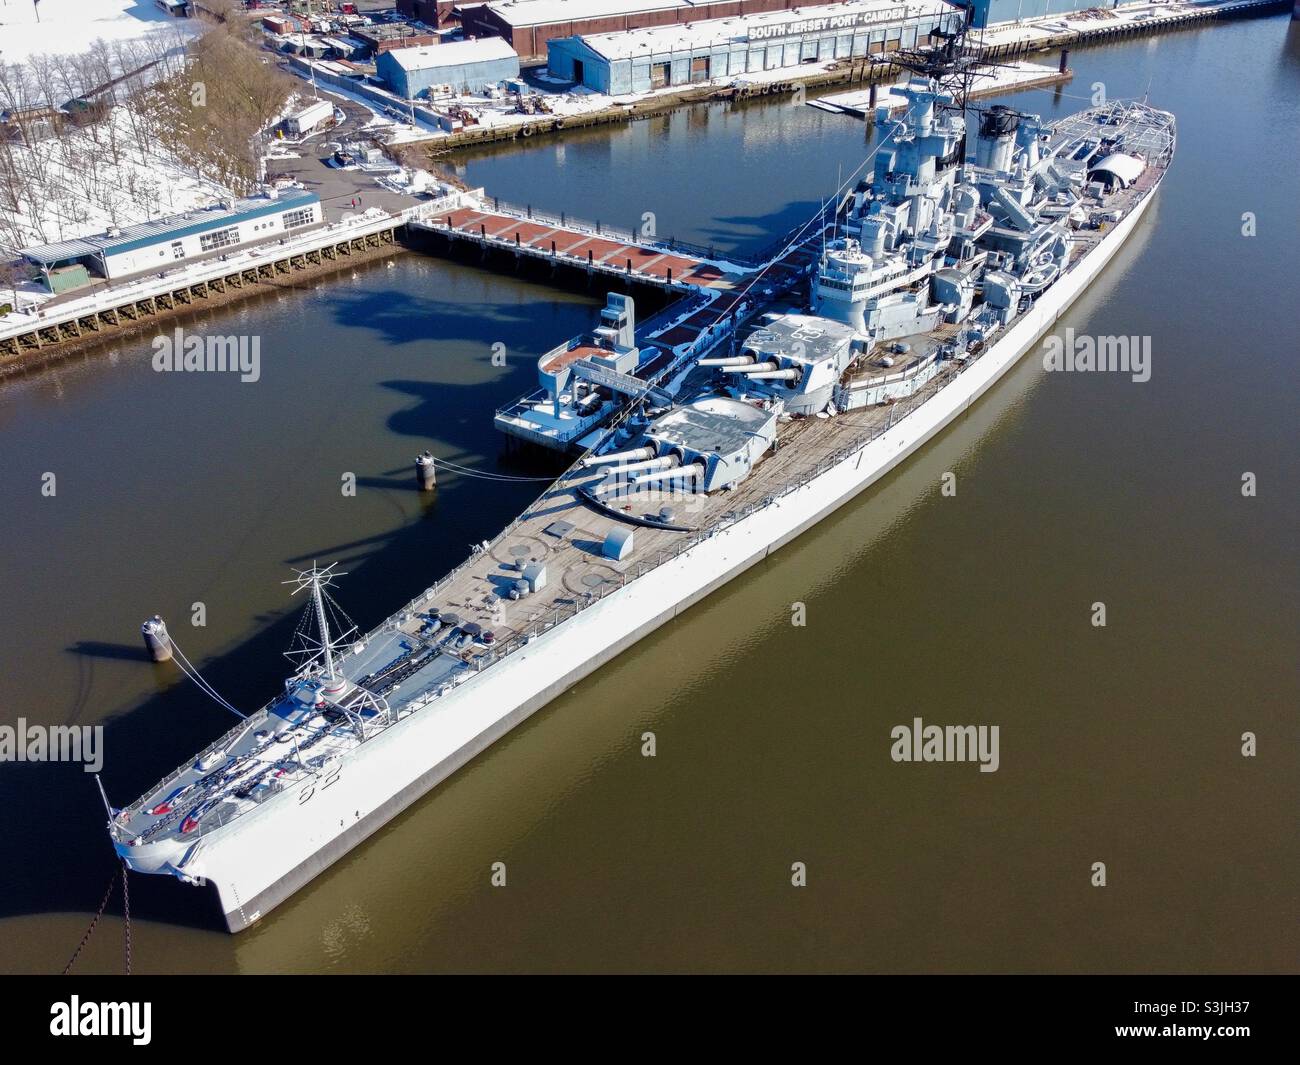 The Battleship USS New Jersey (BB-62) Stock Photo